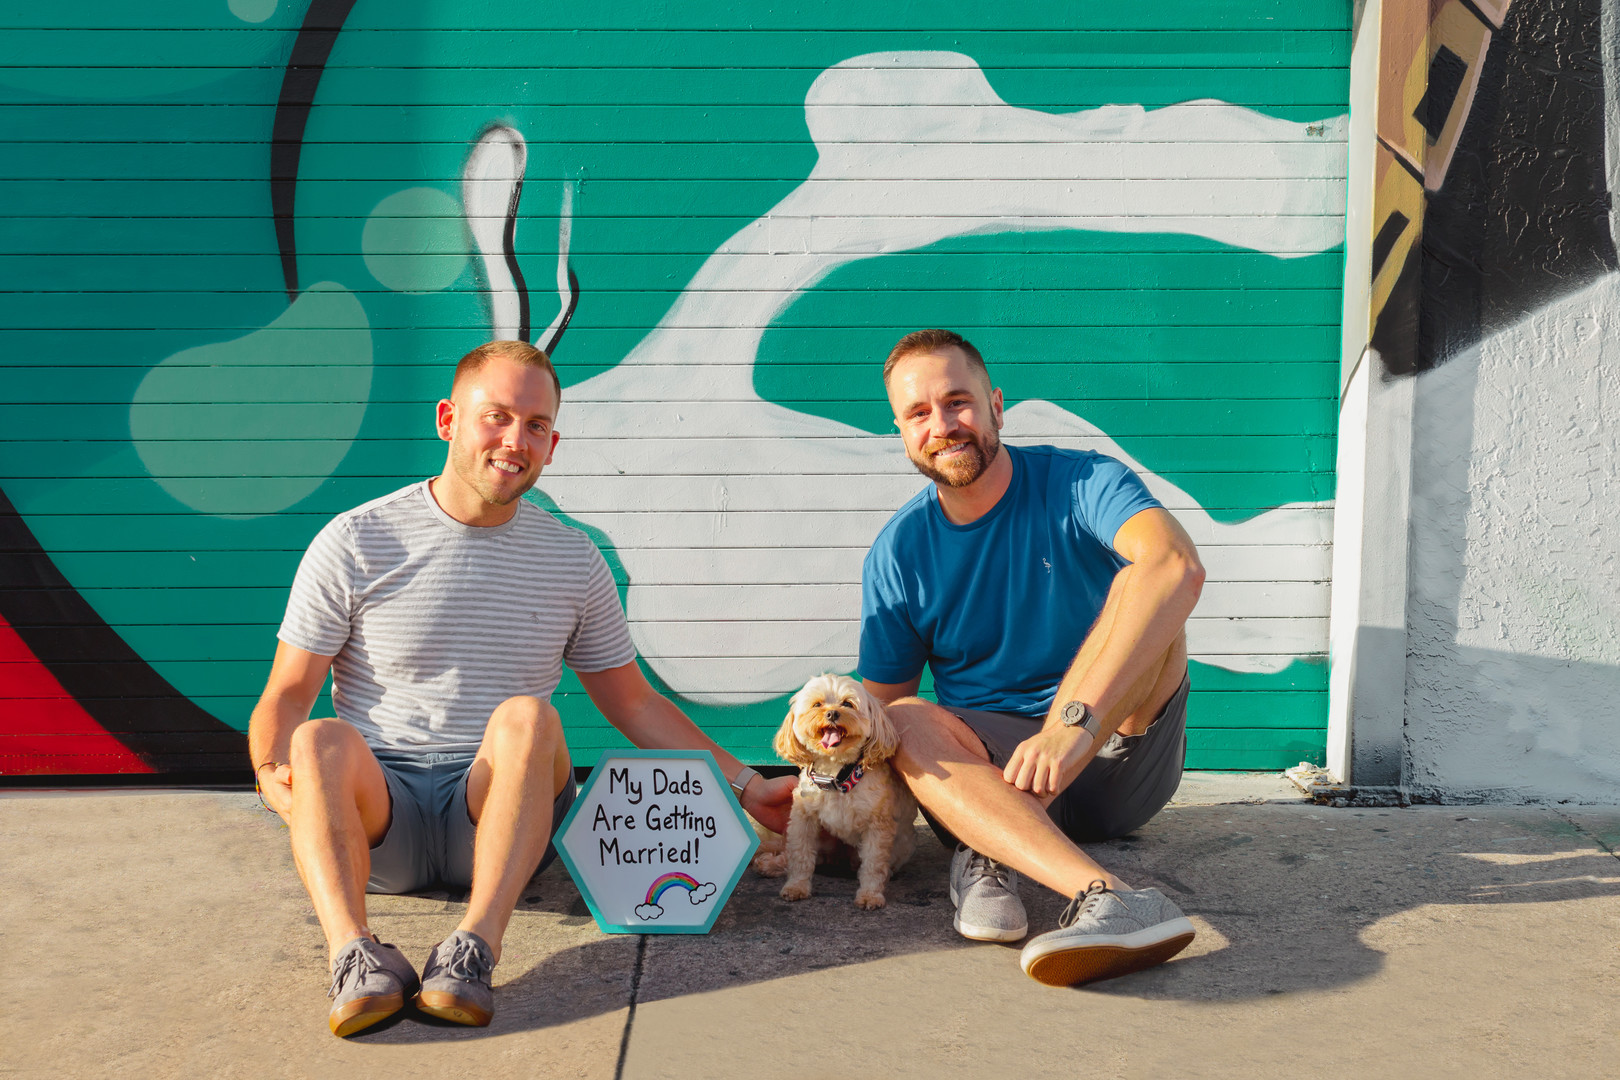 Fun, colorful arcade engagement photos two grooms street art Miami, Florida art district graffiti casual dog dads